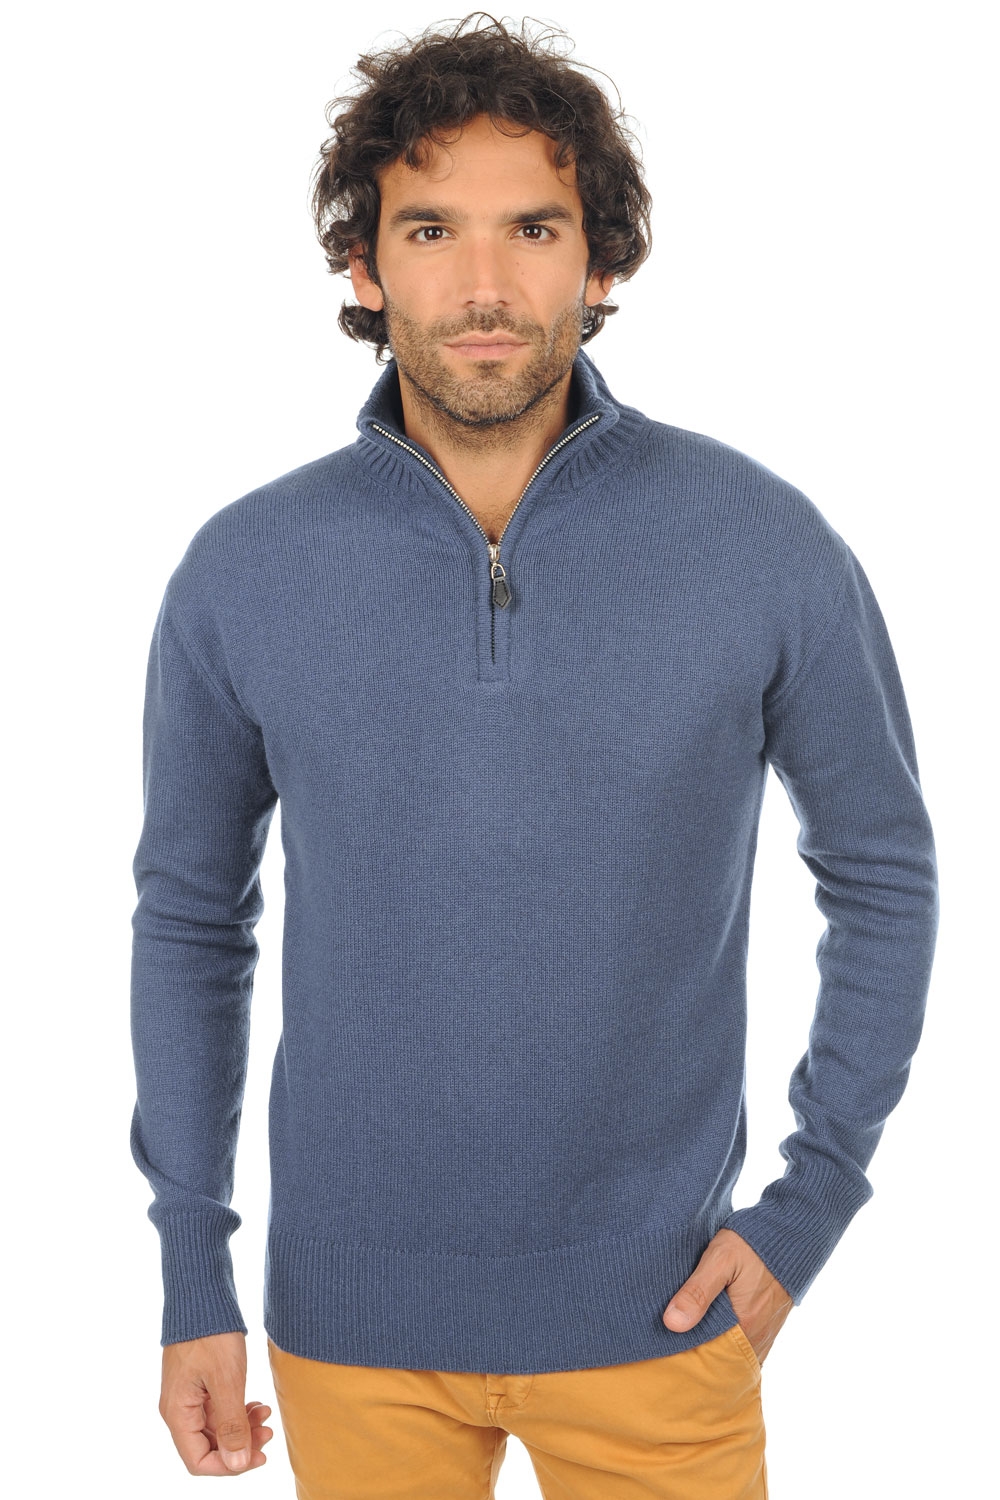 Cashmere men polo style sweaters donovan twilight blue 4xl